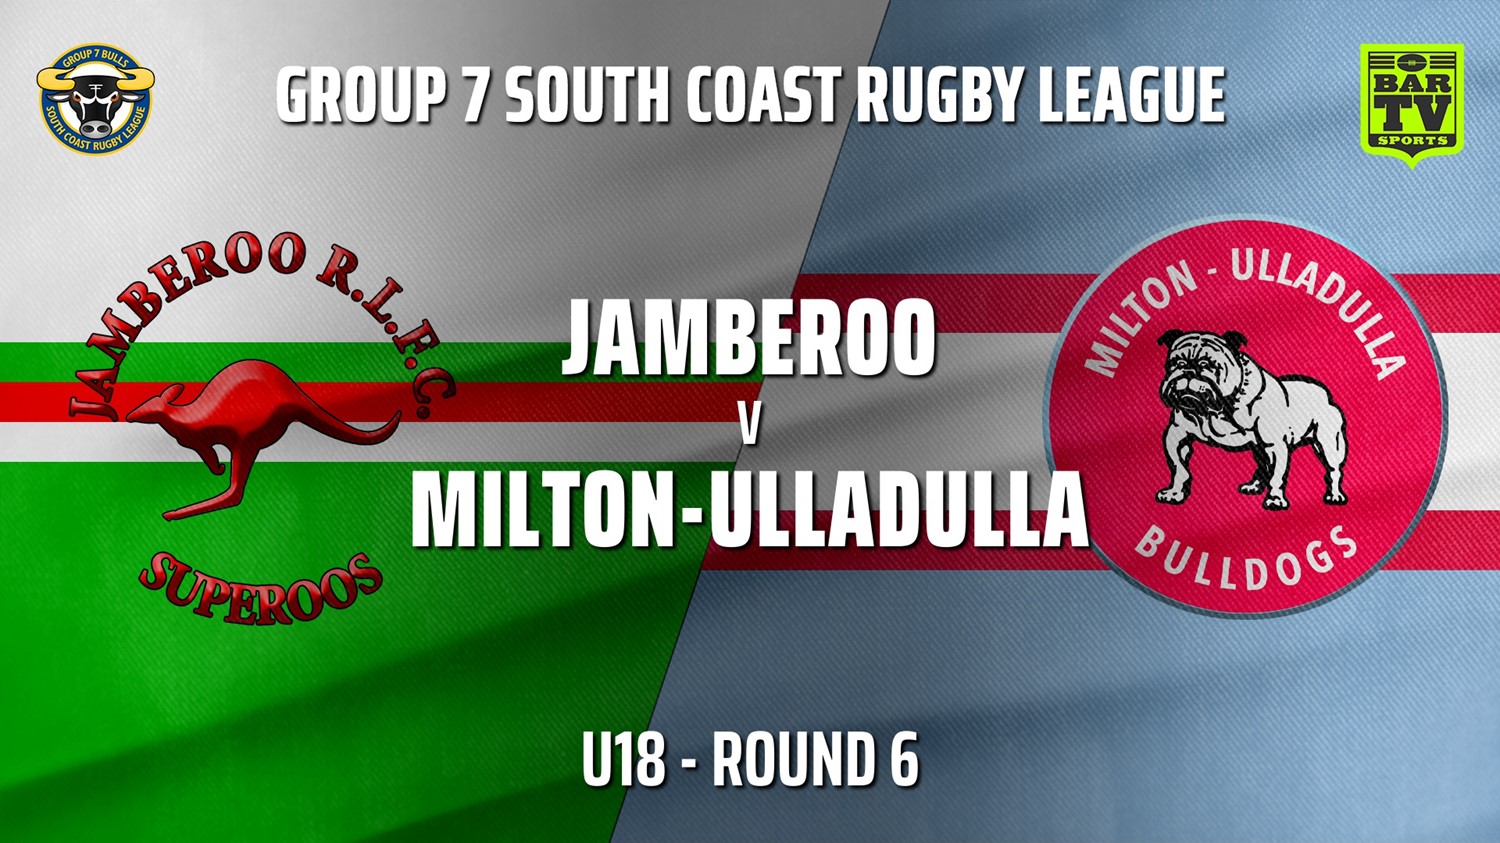 210522-Group 7 RL Round 6 - U18 - Jamberoo v Milton-Ulladulla Bulldogs Slate Image